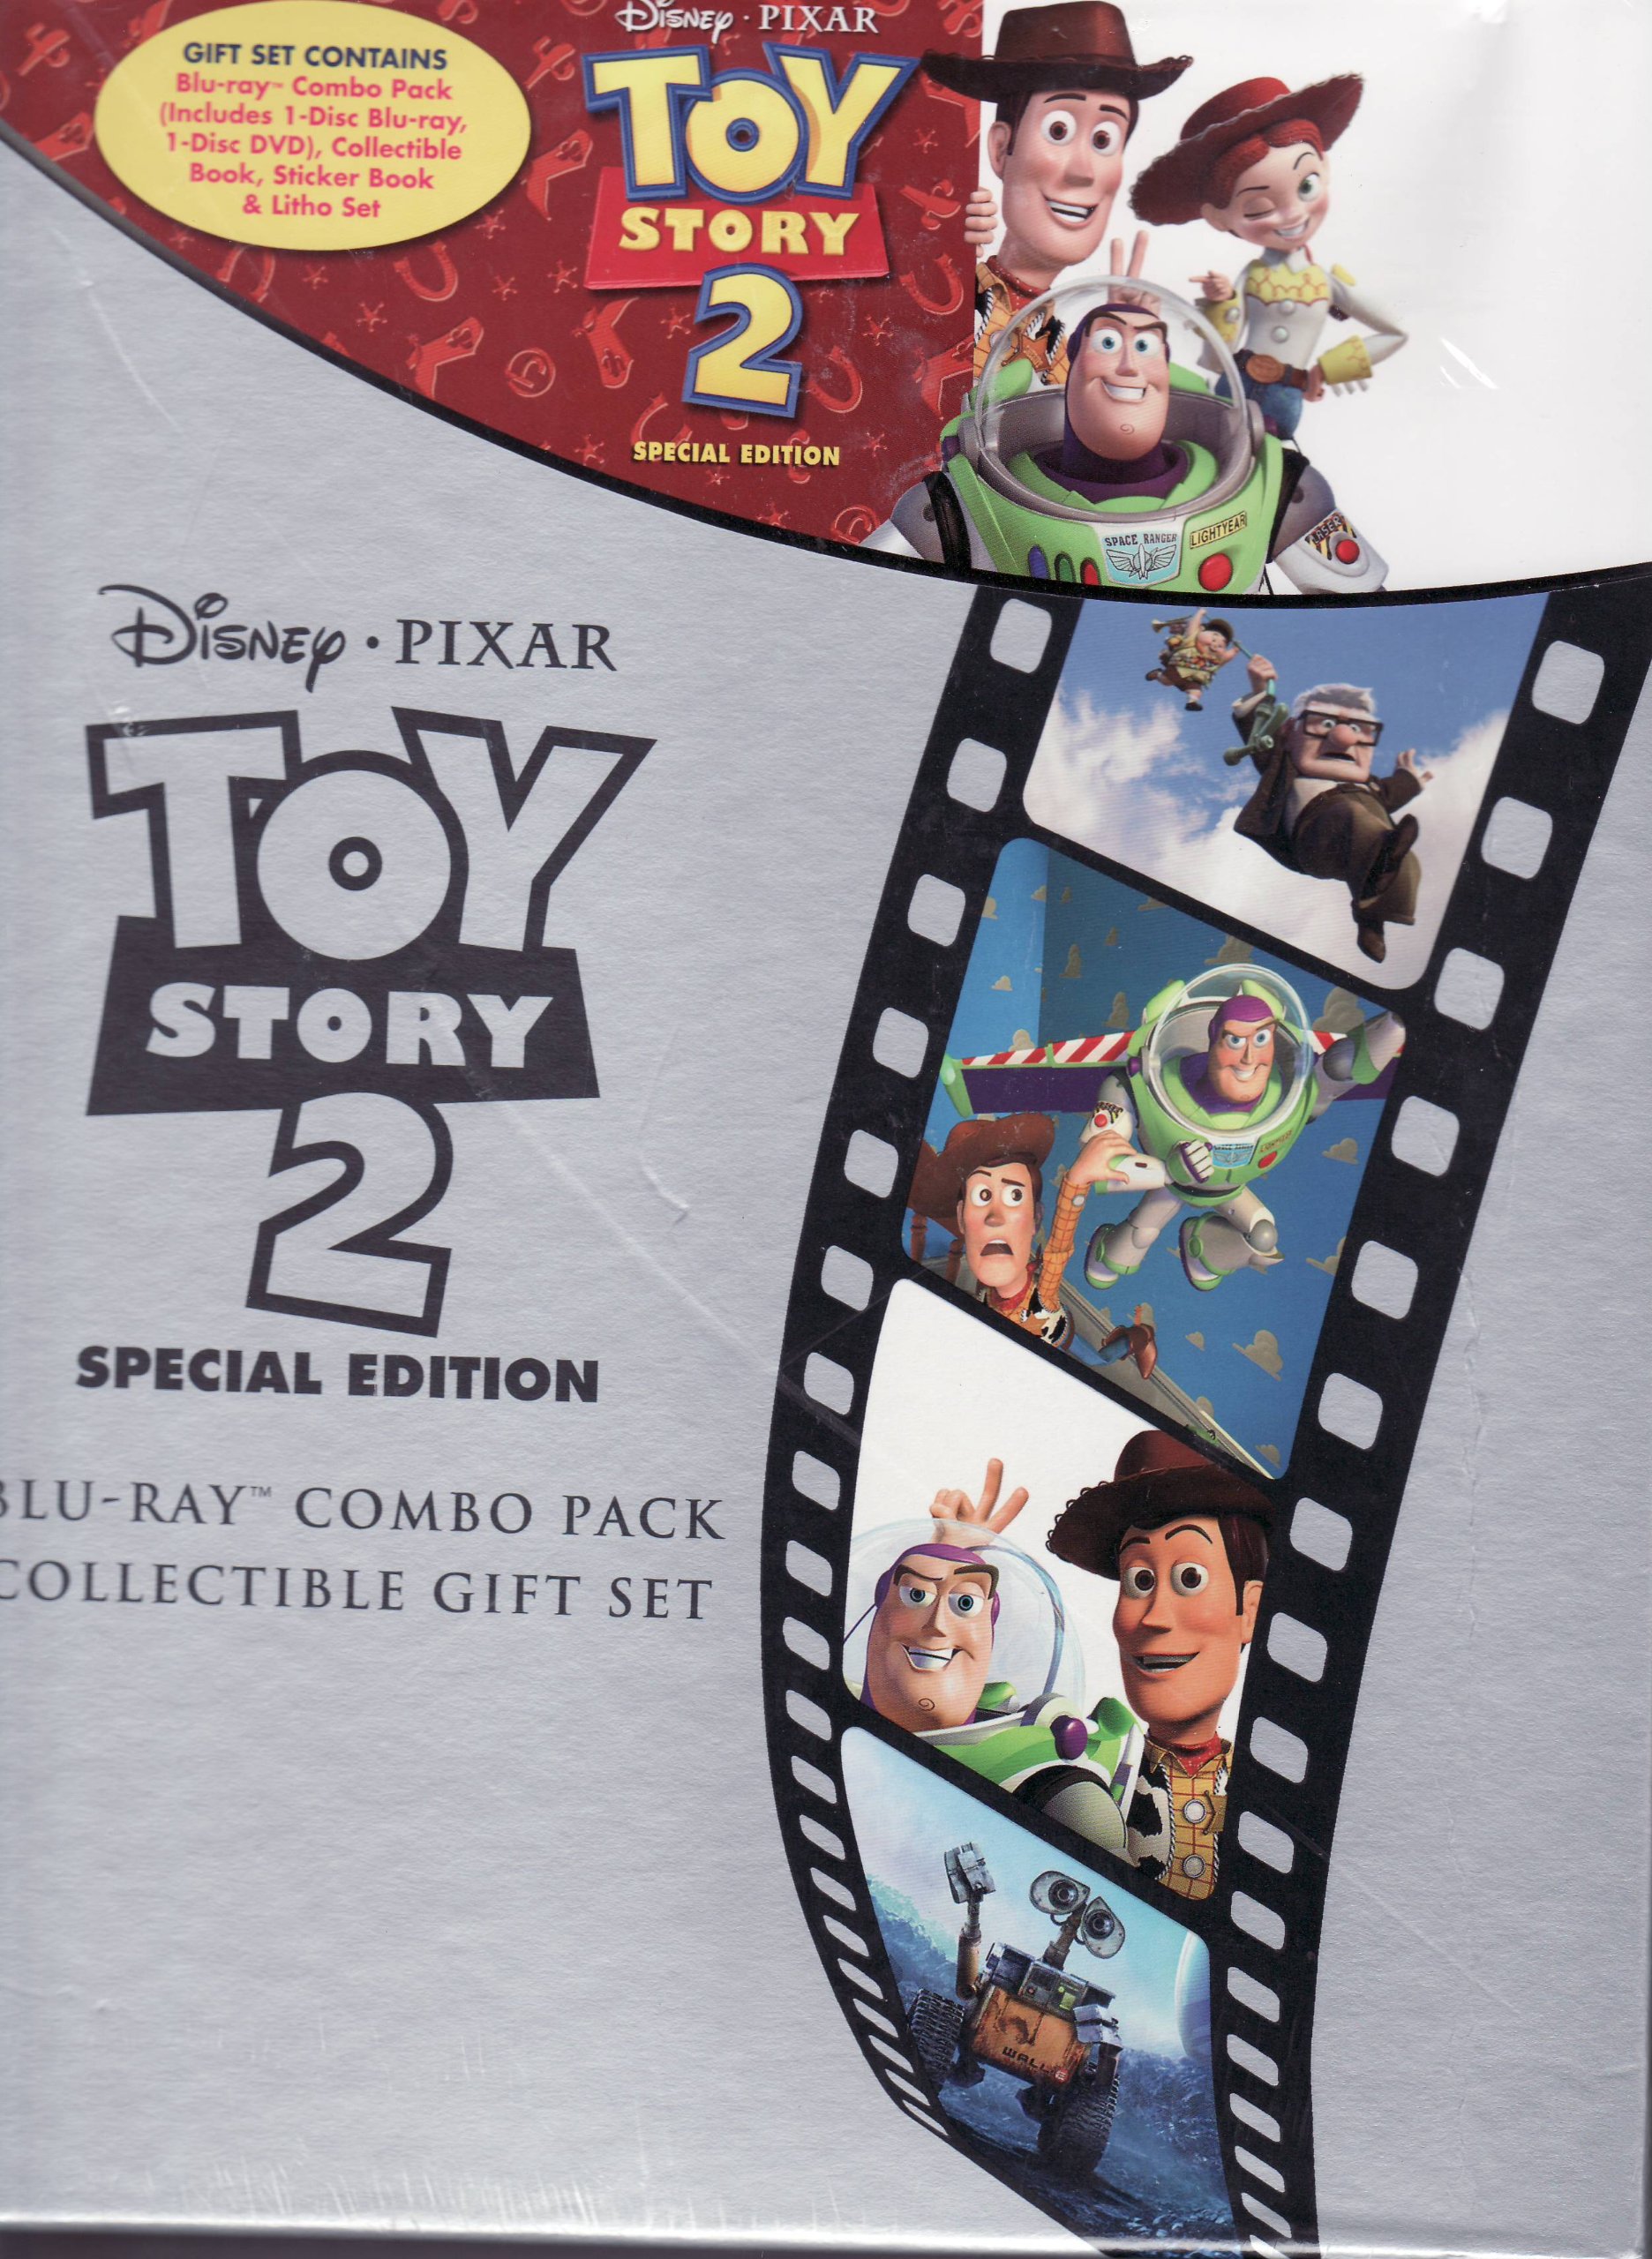 【中古】【未使用・未開封品】Toy Story 2 Disney Pixar LIMITED EDITION GIFT SET Includes 1 Disc Blu-Ray, 1 Disc DVD, Collectible Book, Sticker Book